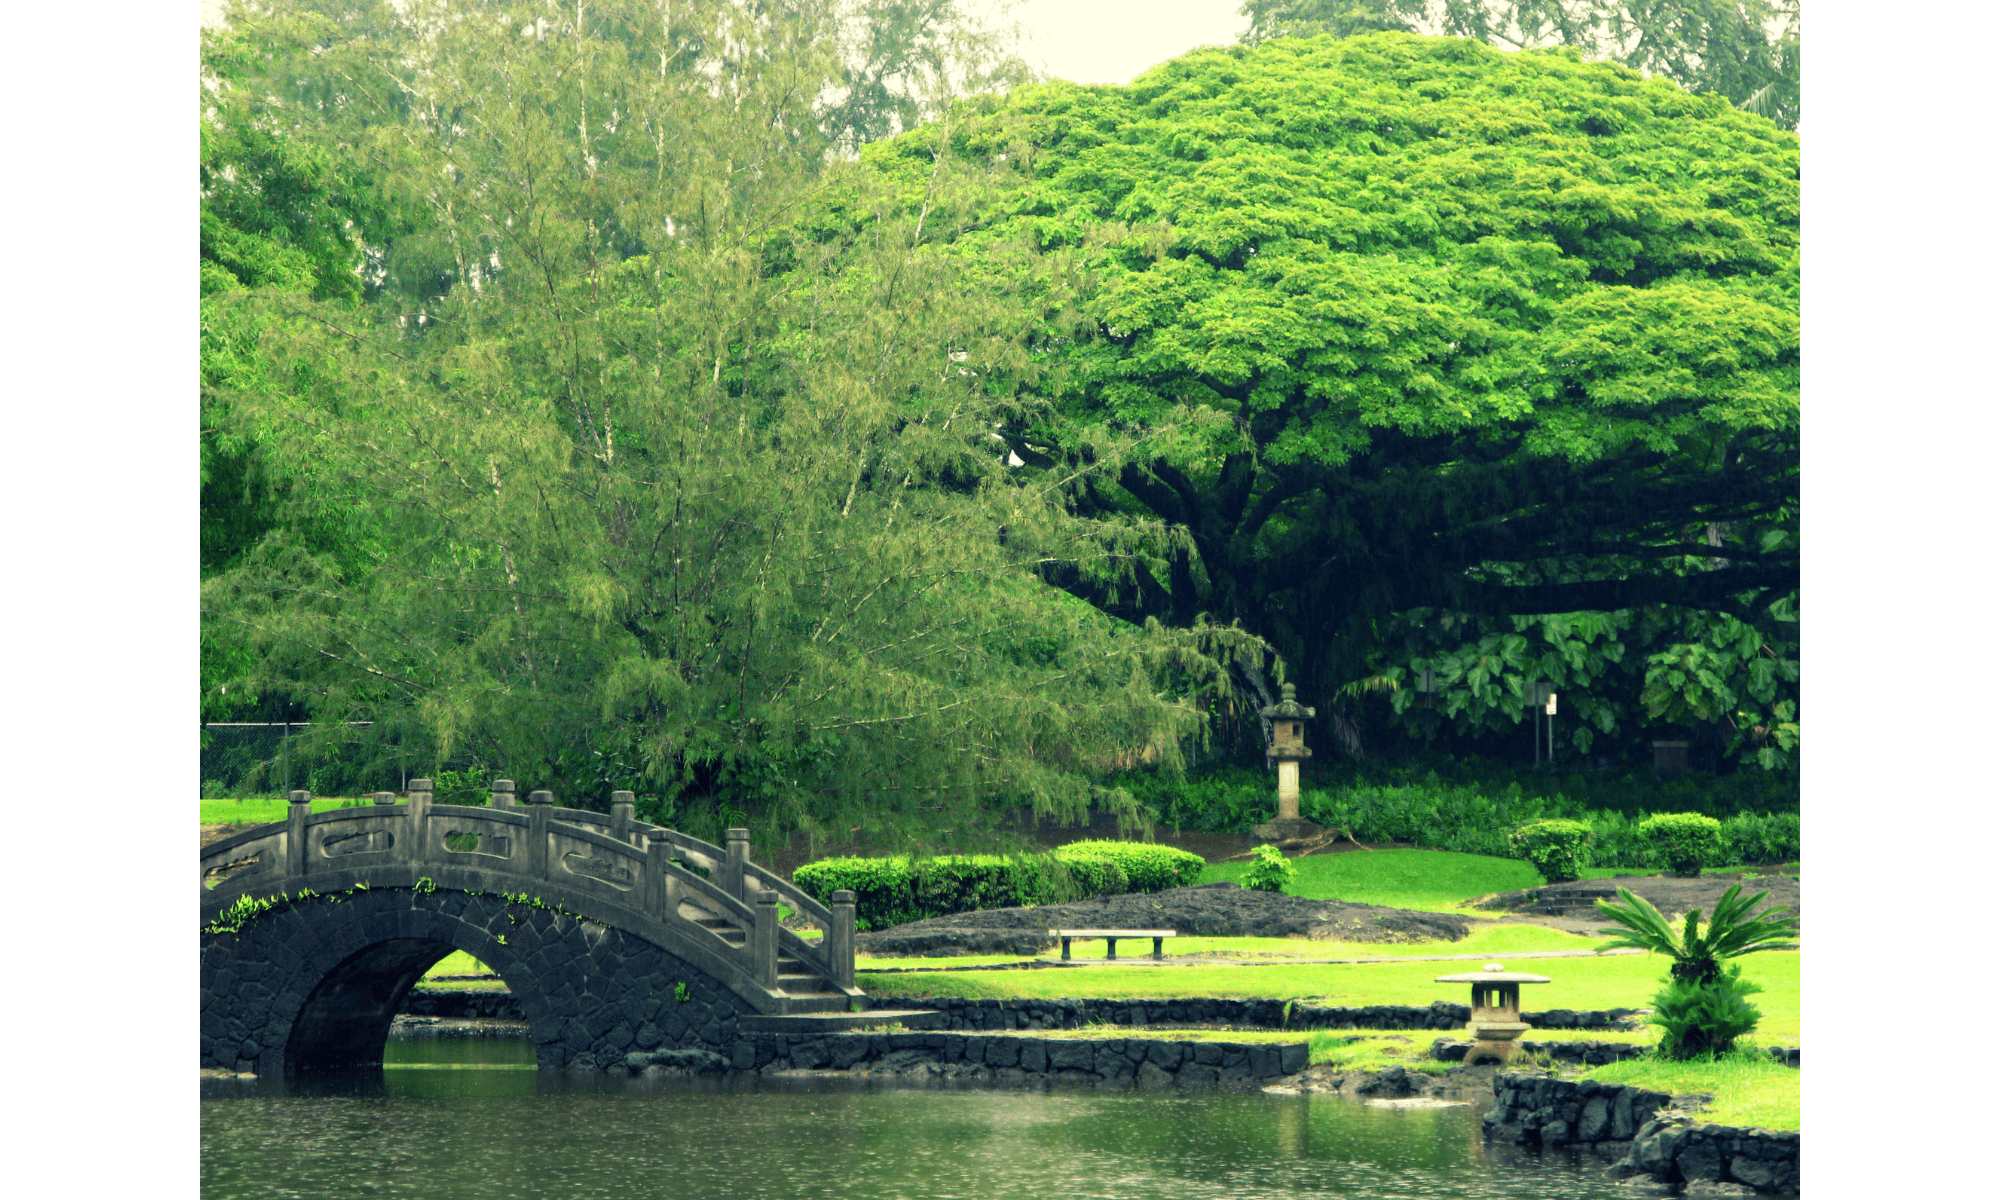  Lili'uokalani Gardens in Oahu